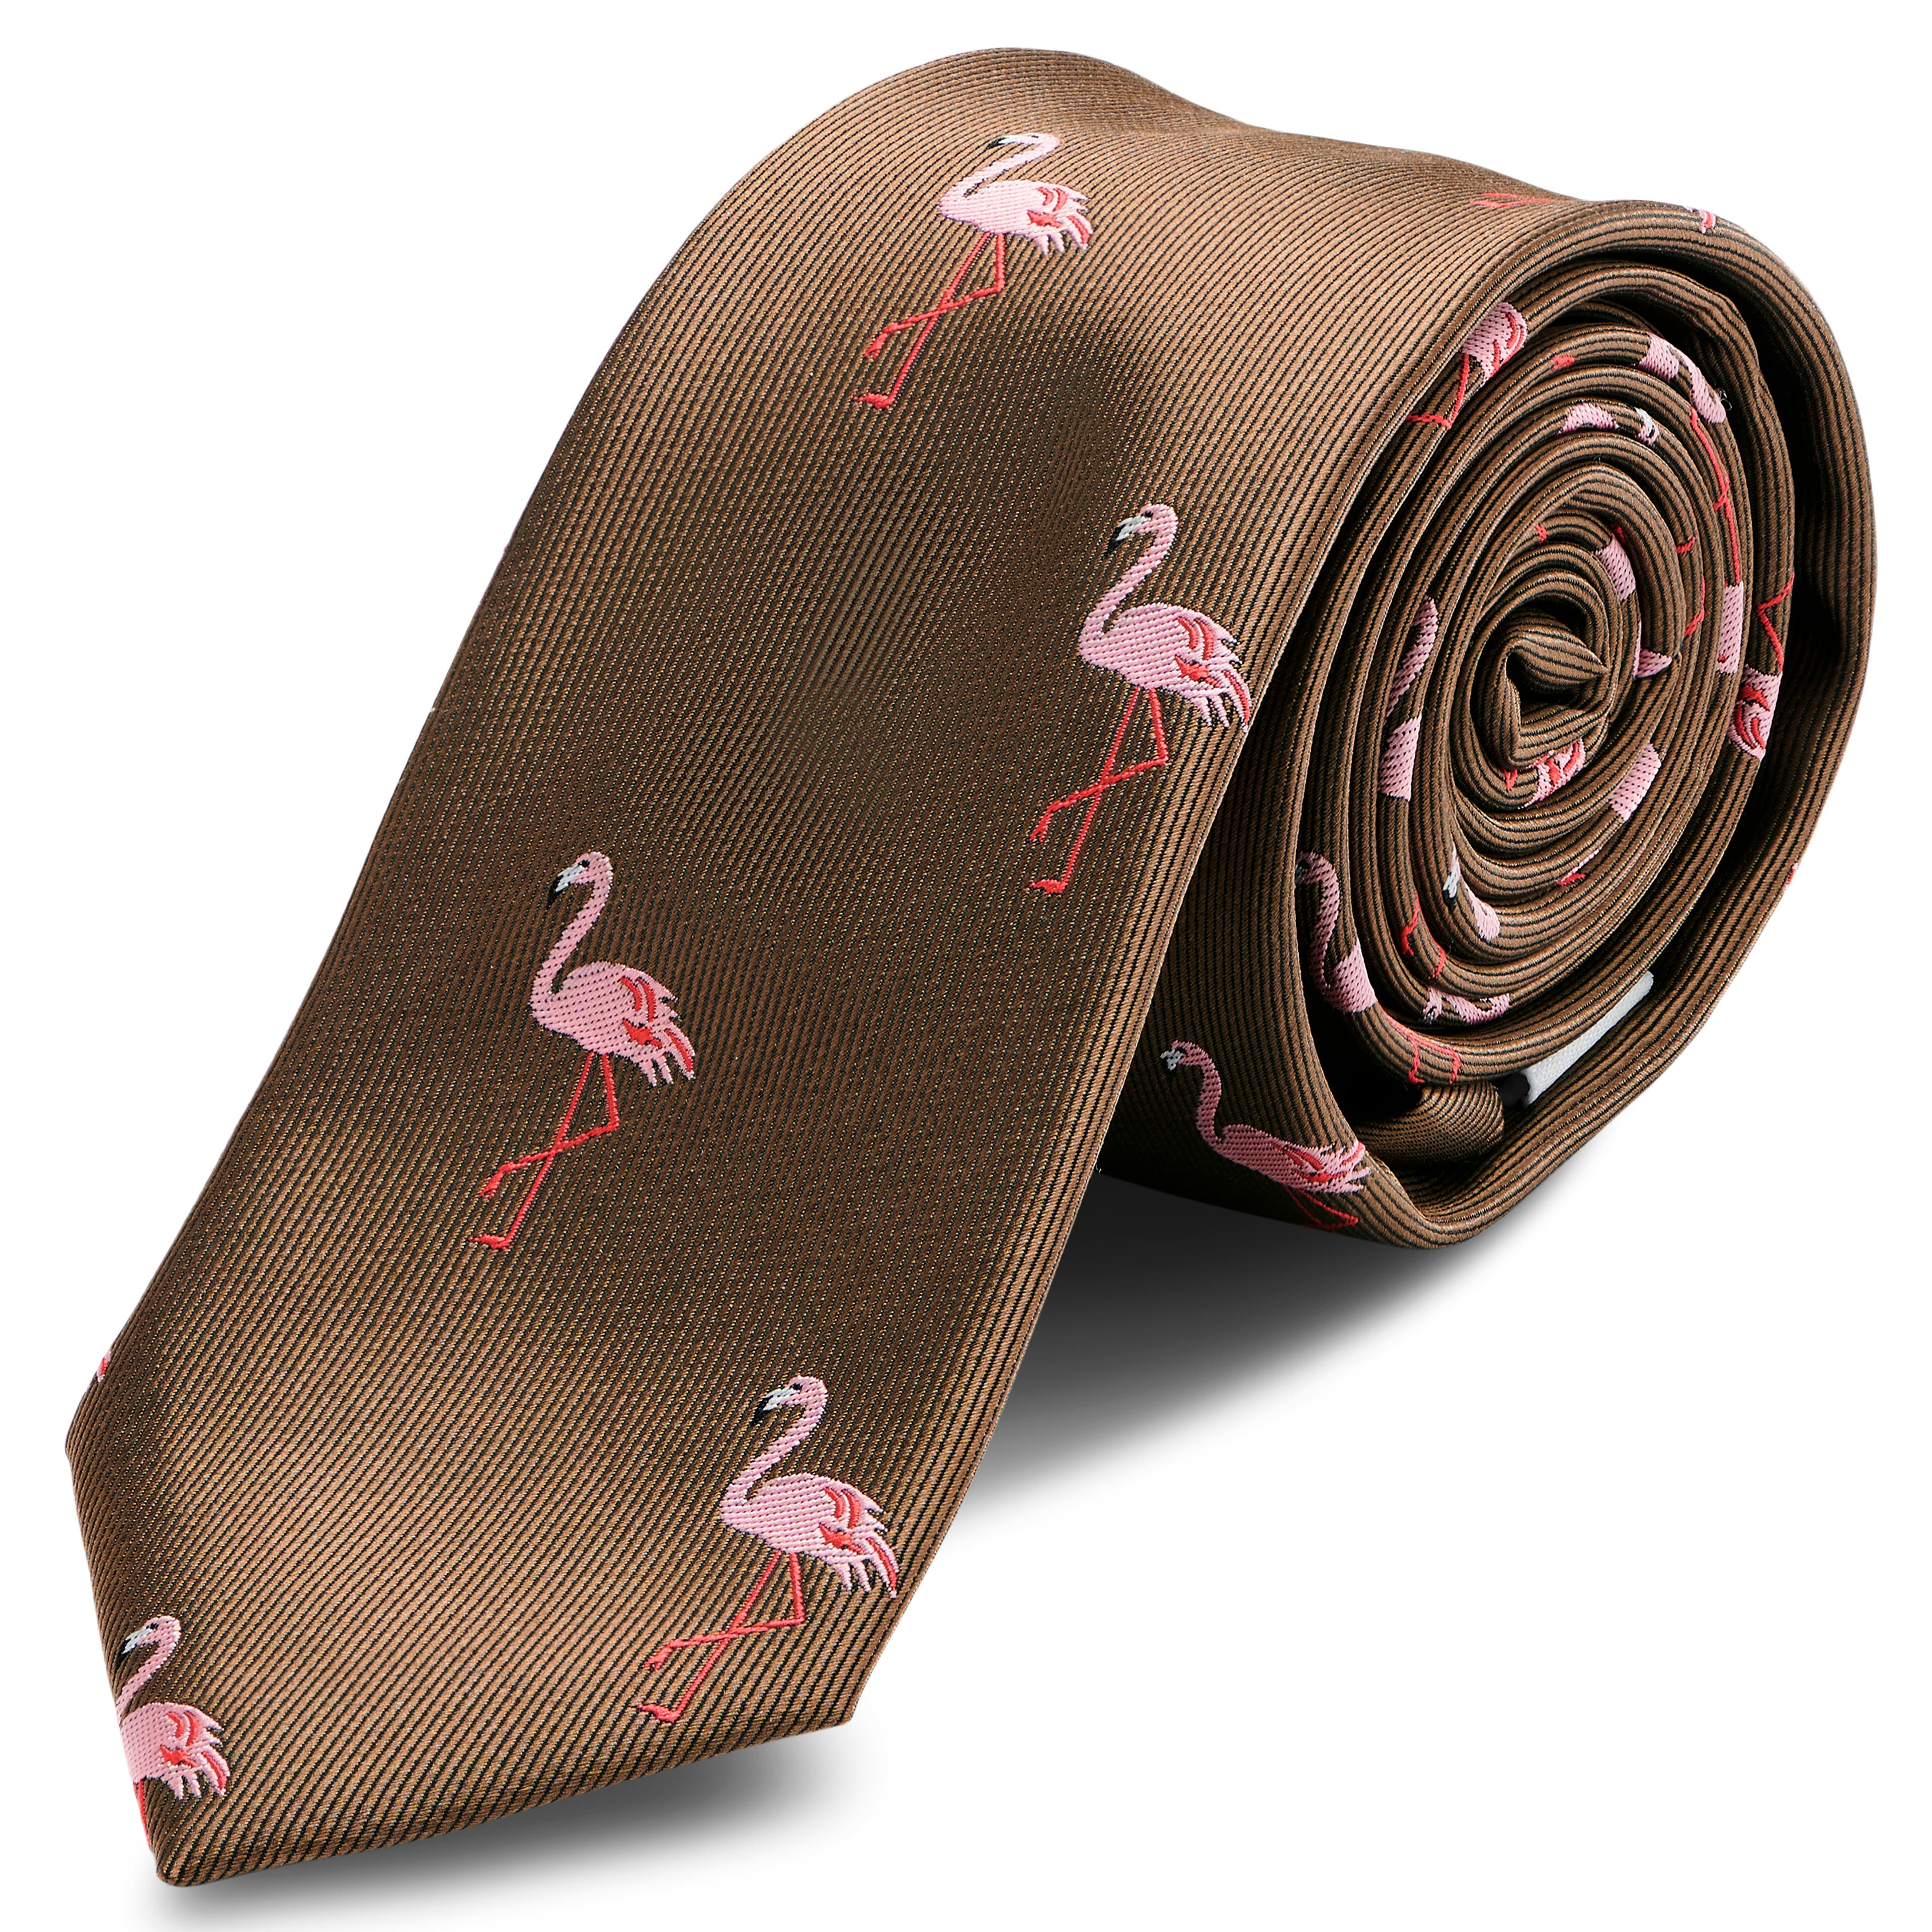 Corbata estrecha marrón con flamencos rosas